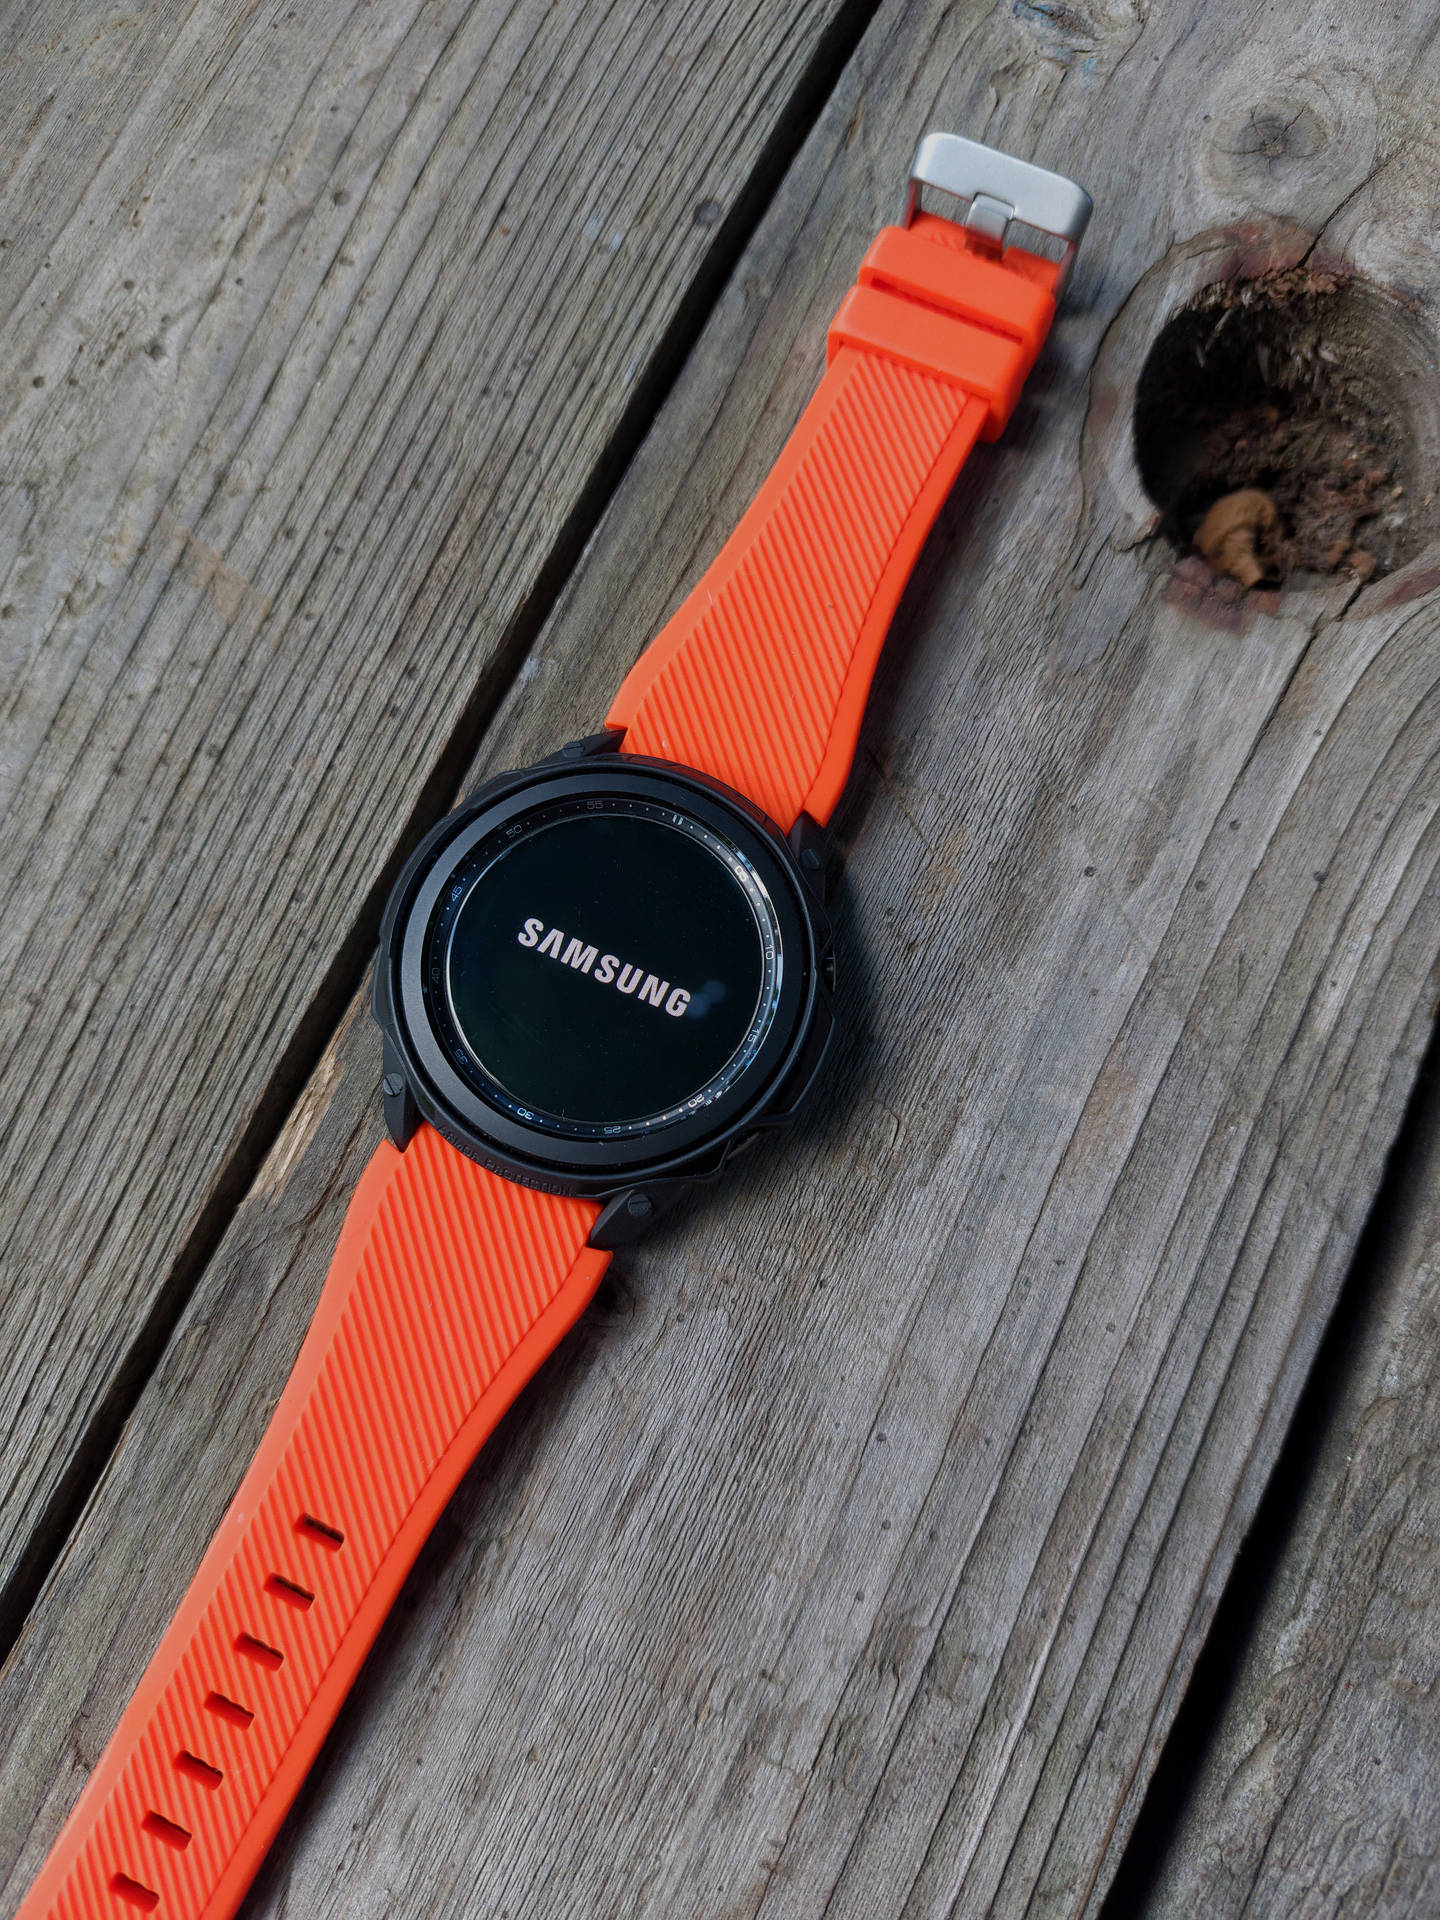 Samsung Smartwatch With Orange Band